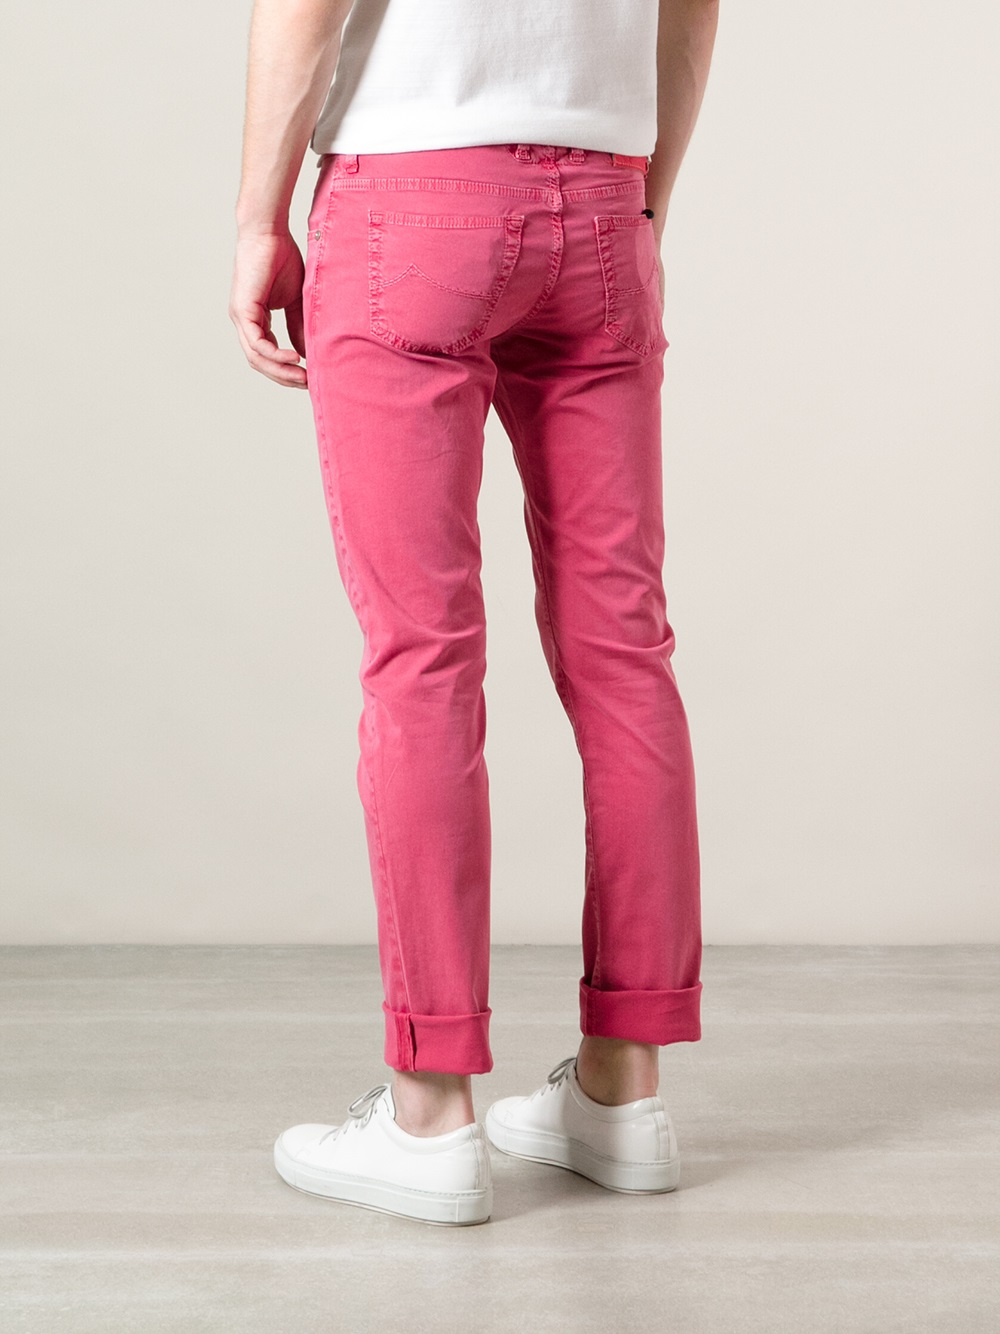 mens pink skinny jeans